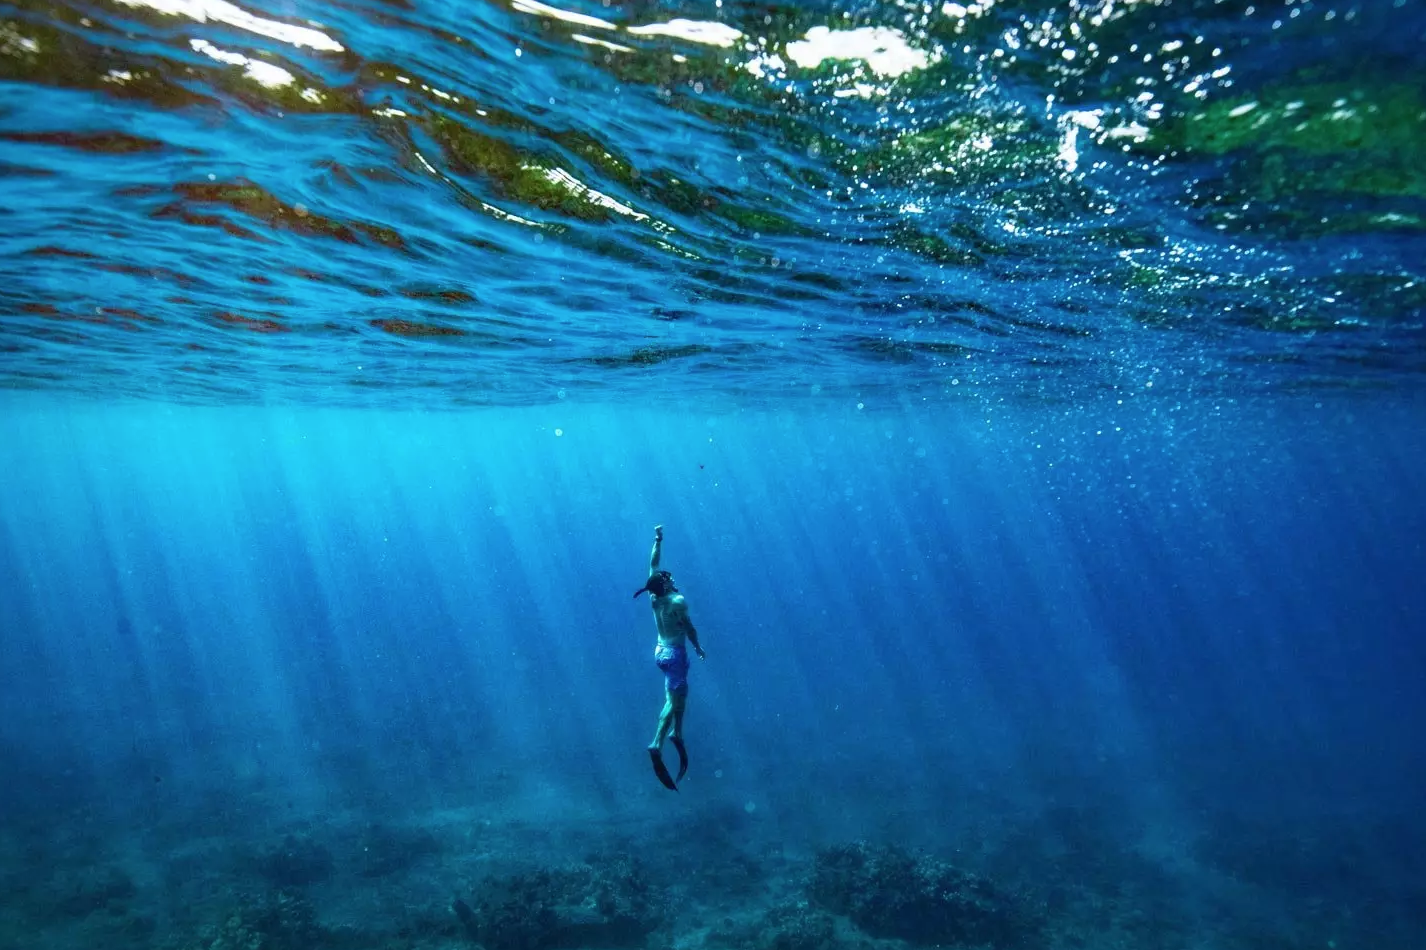 Underwater travel photographs